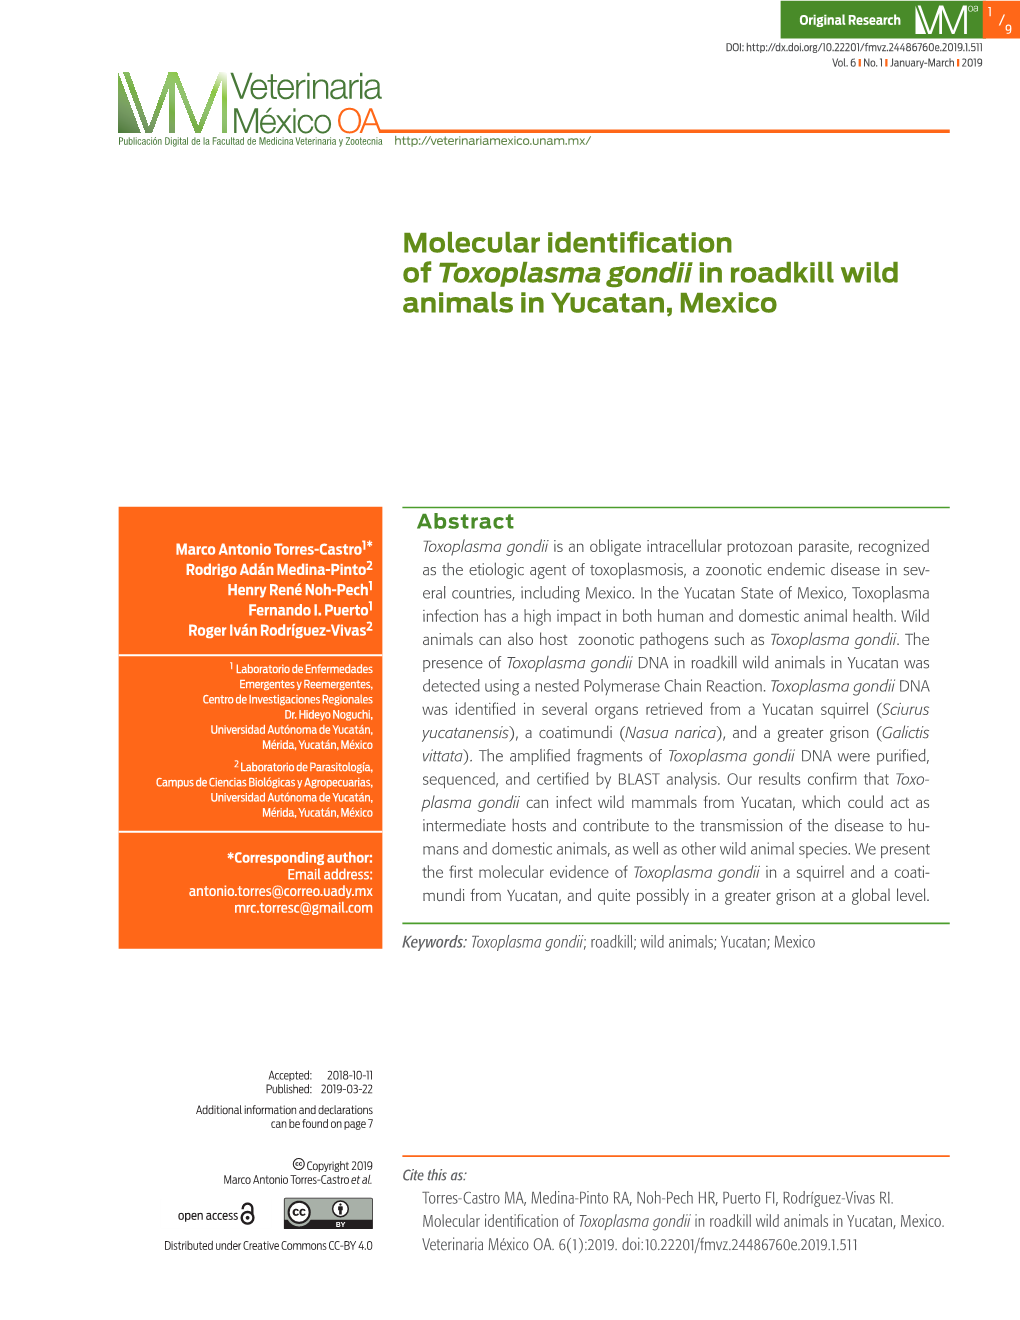 Molecular Identification of Toxoplasma Gondii in Roadkill Wild Animals in Yucatan, Mexico